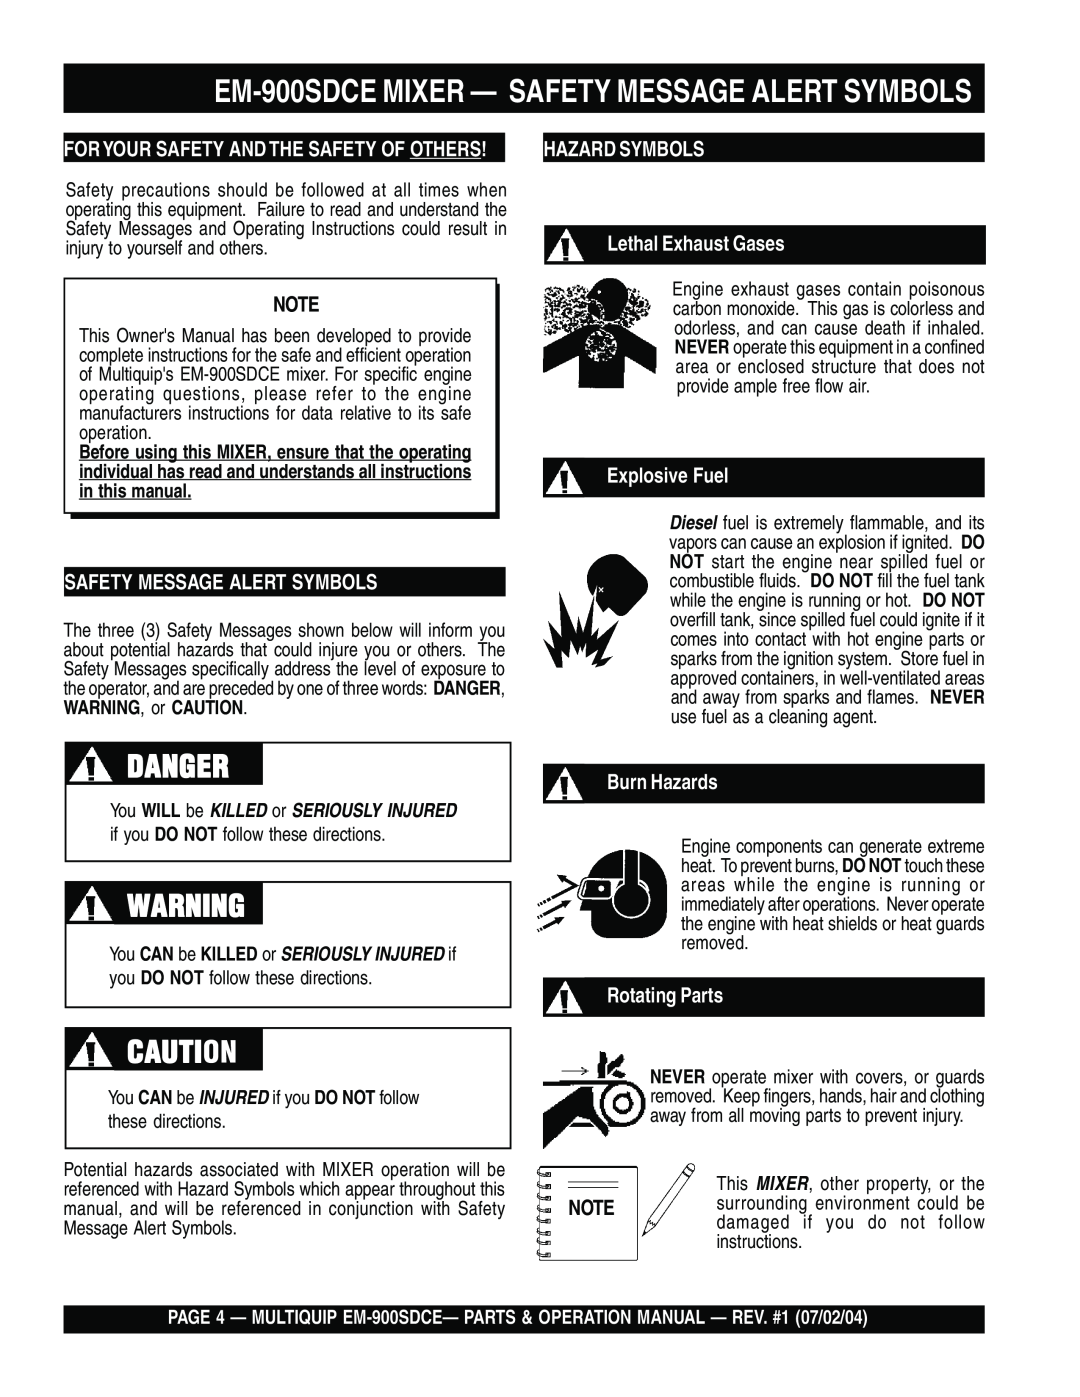 Multiquip manual Danger, EM-900SDCE MIXER - SAFETY MESSAGE ALERT SYMBOLS, Safety Message Alert Symbols, Explosive Fuel 